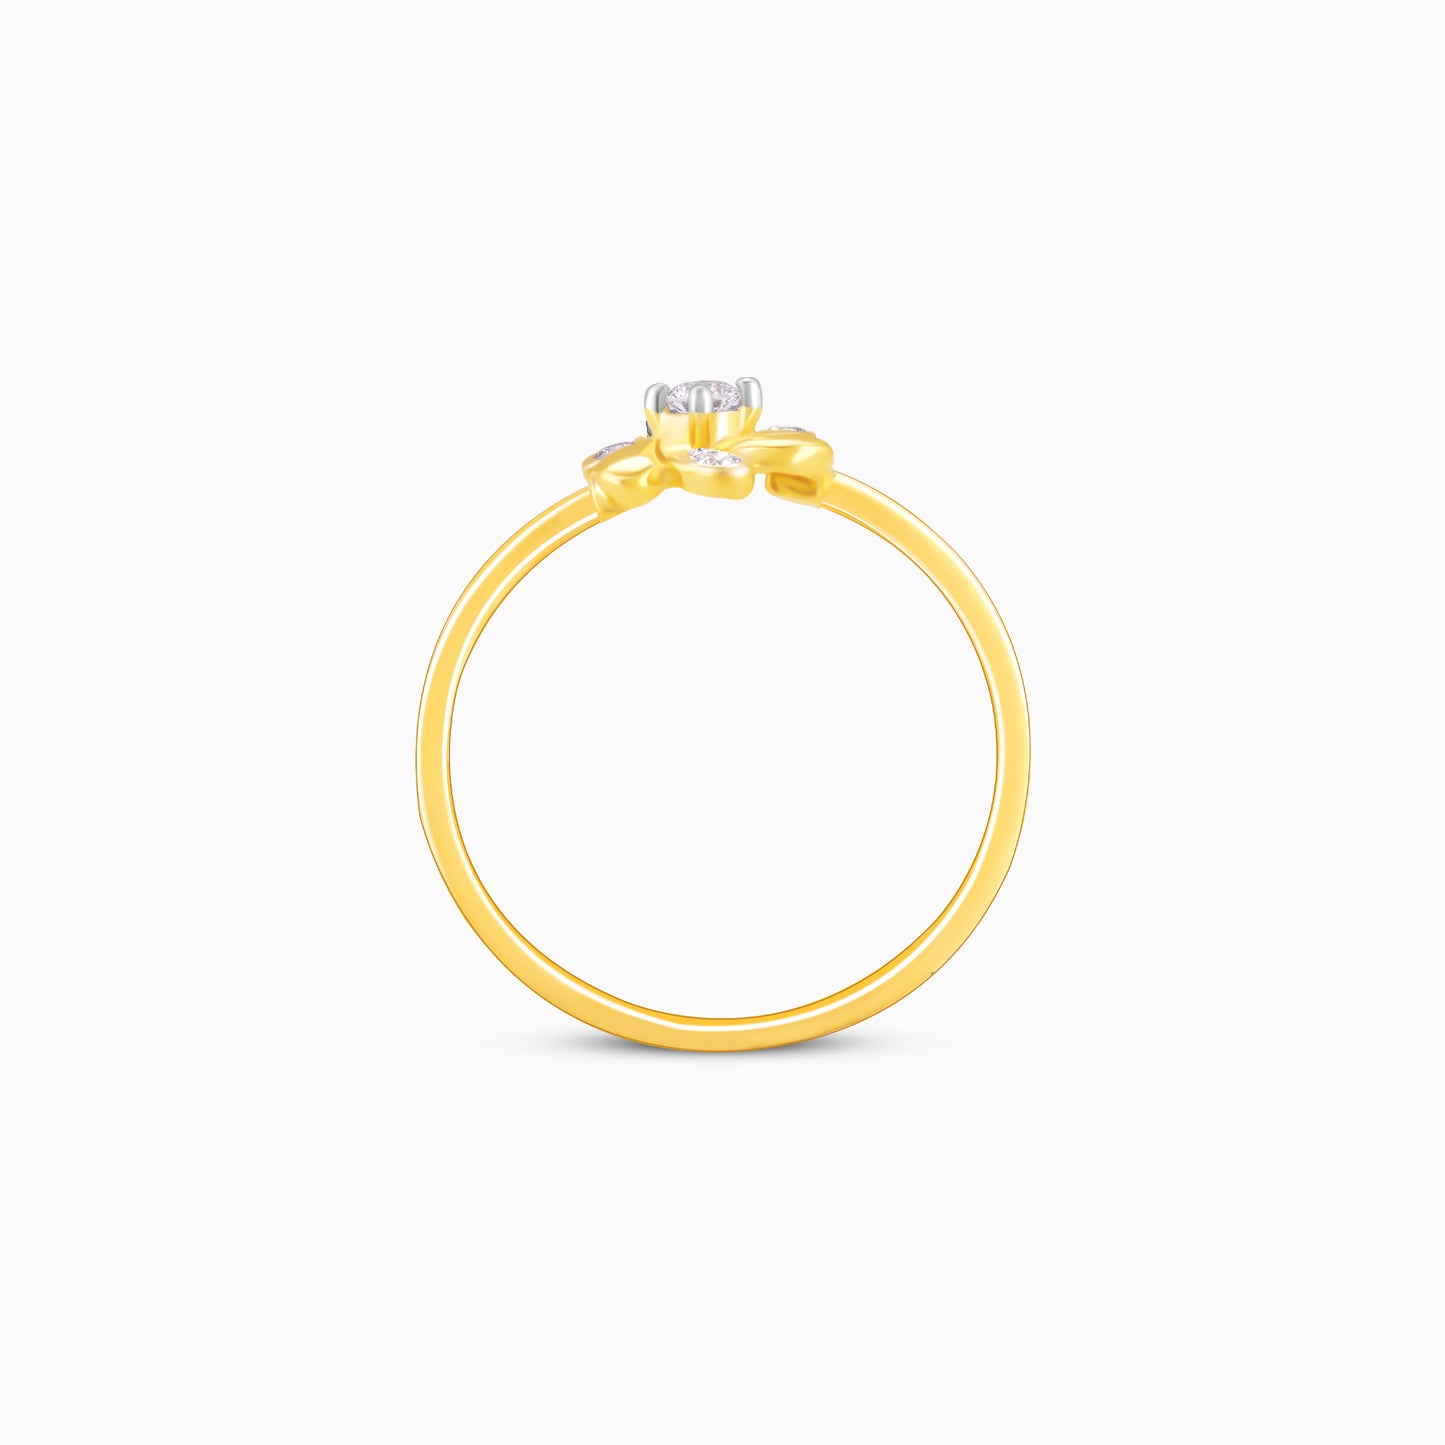 Gold Floral Swirl Diamond Ring